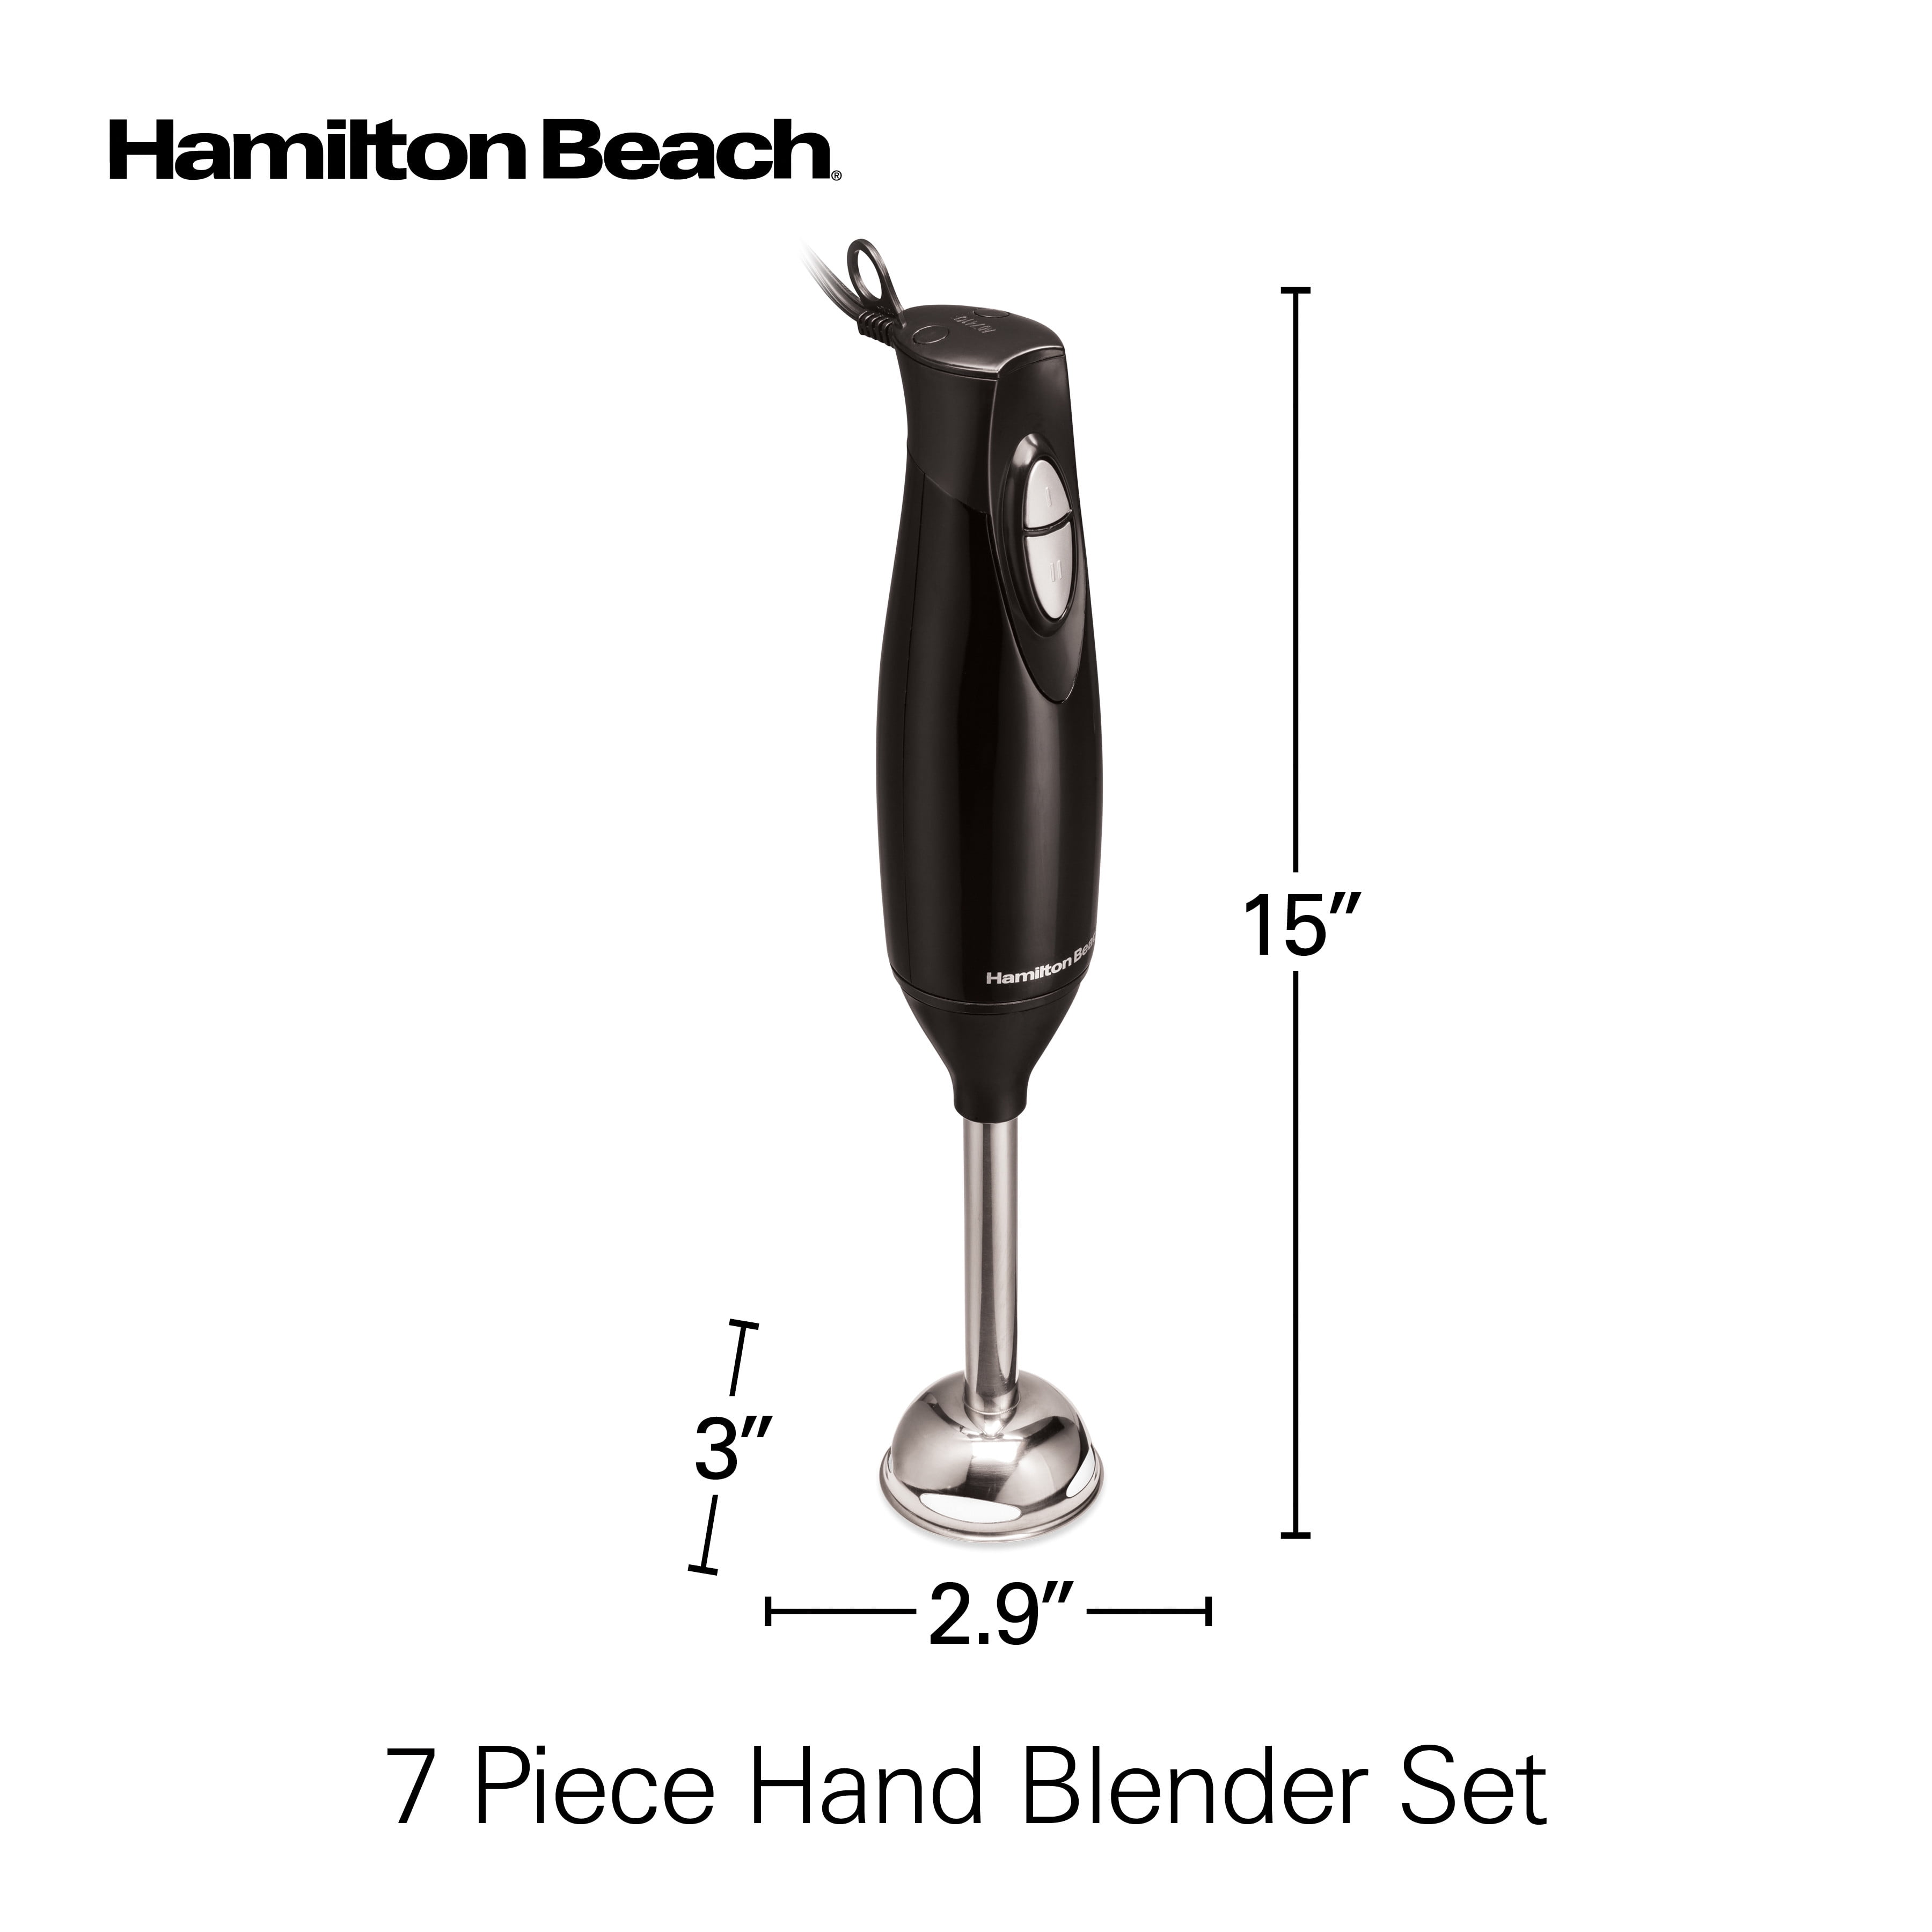 Hamilton Beach Smoothie Electric Blender with 10 Speeds, 56 oz. BPA-Free  Plastic Jar only $24.96 (reg. $44.99) at Walmart